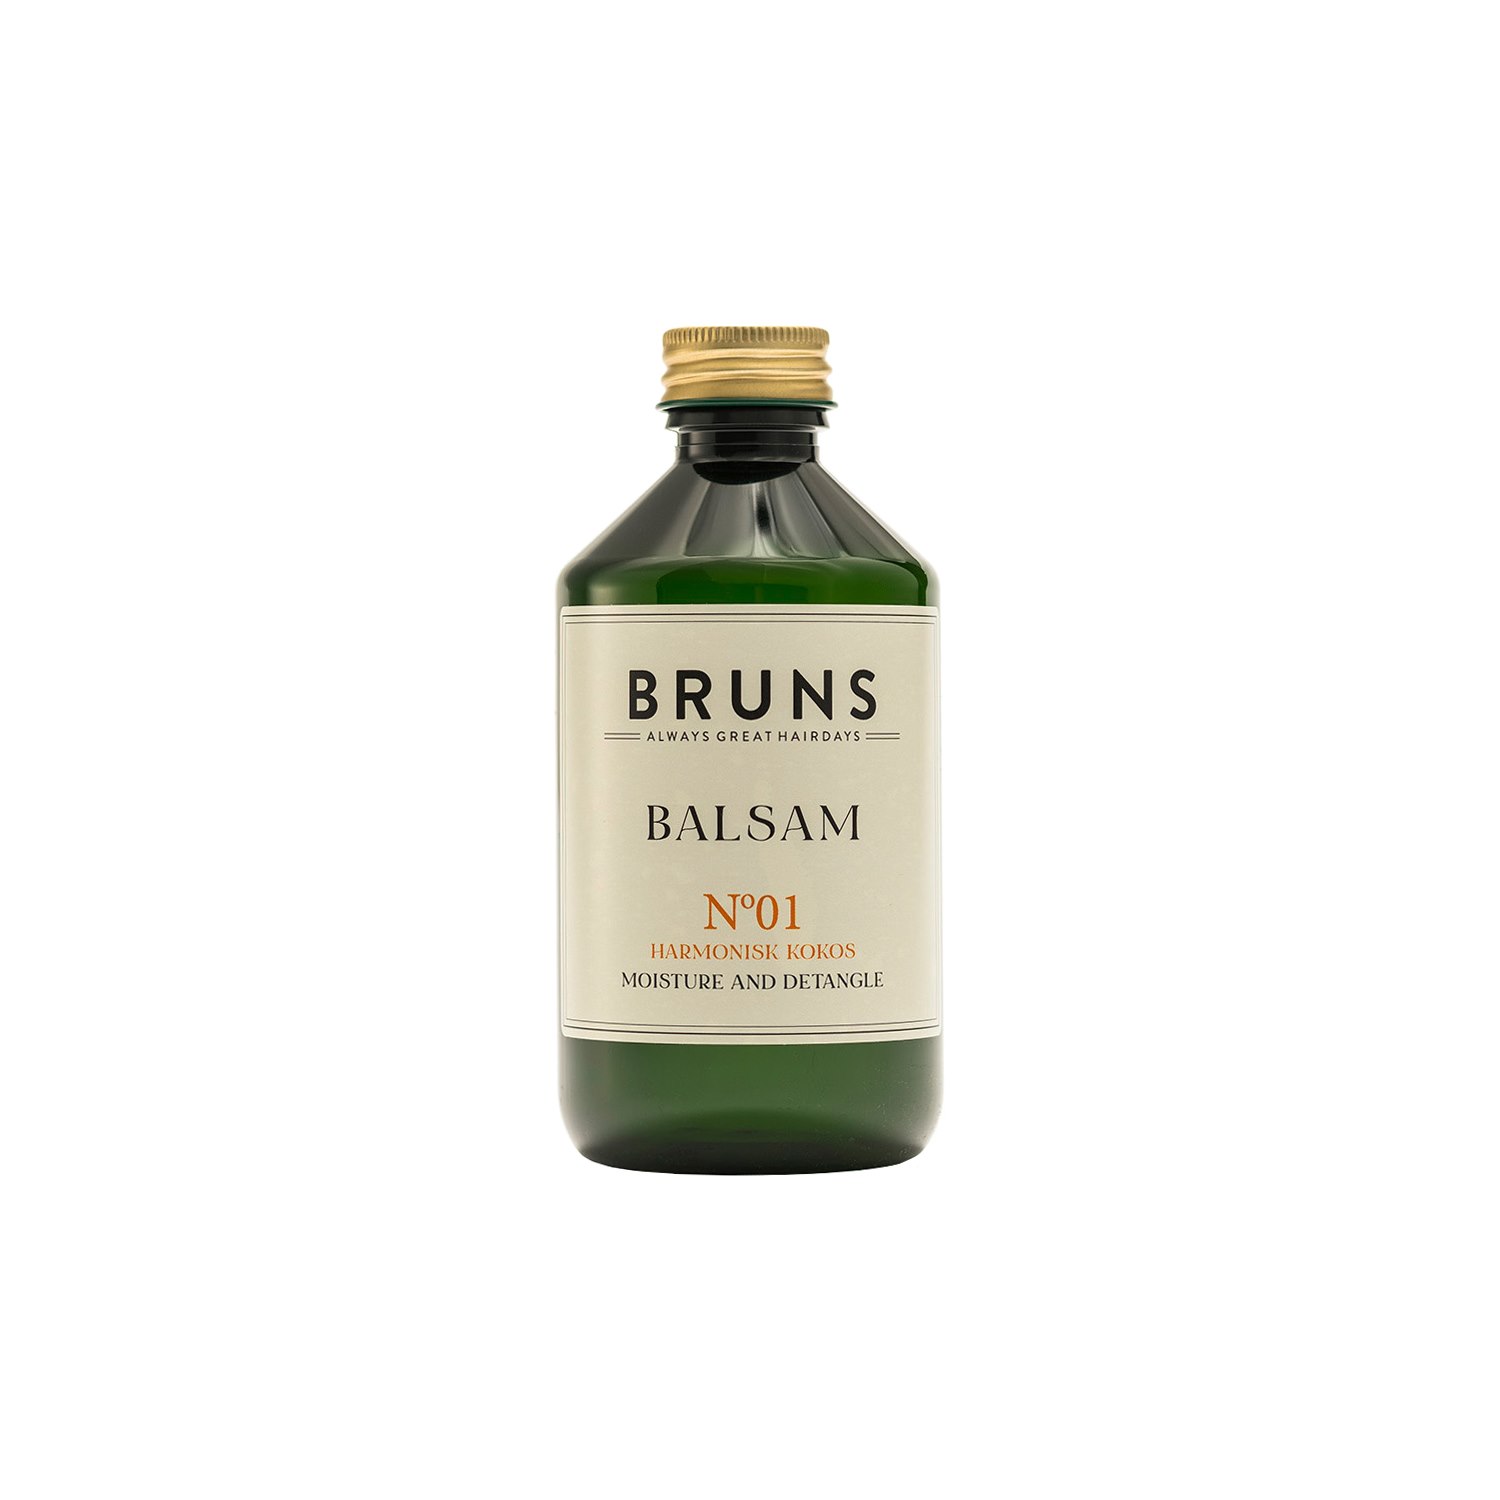 BRUNS Balsam Nº01 - Harmonisk Kokos 300 ml